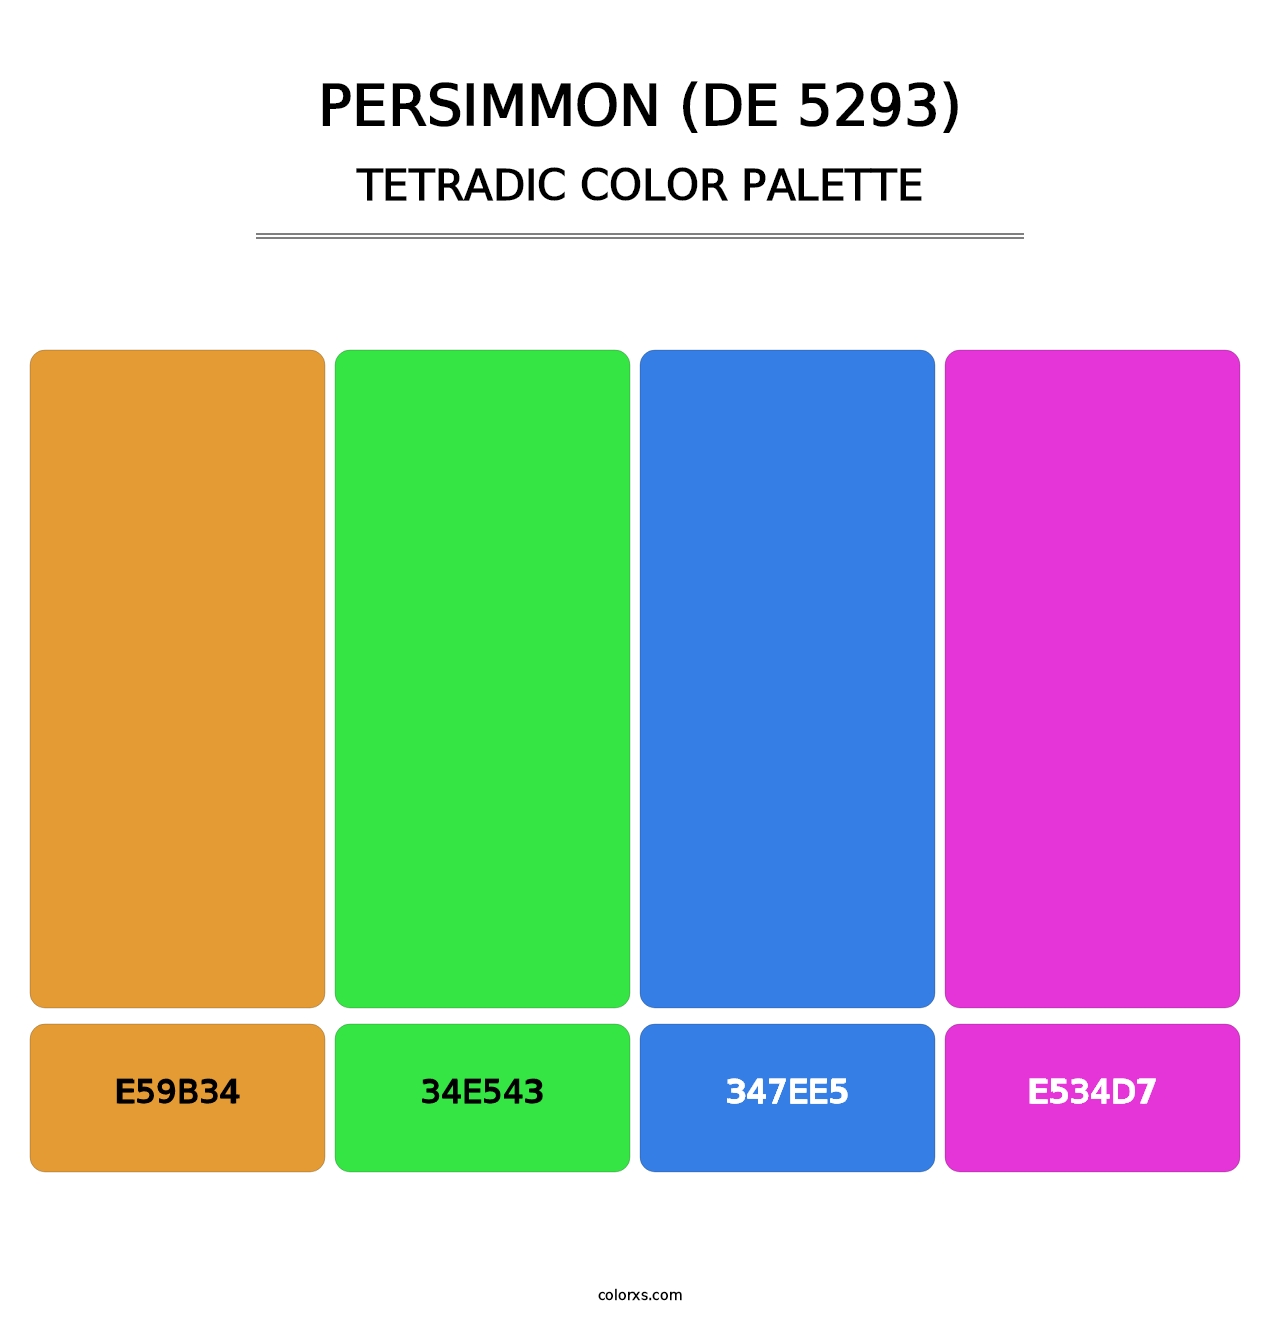 Persimmon (DE 5293) - Tetradic Color Palette